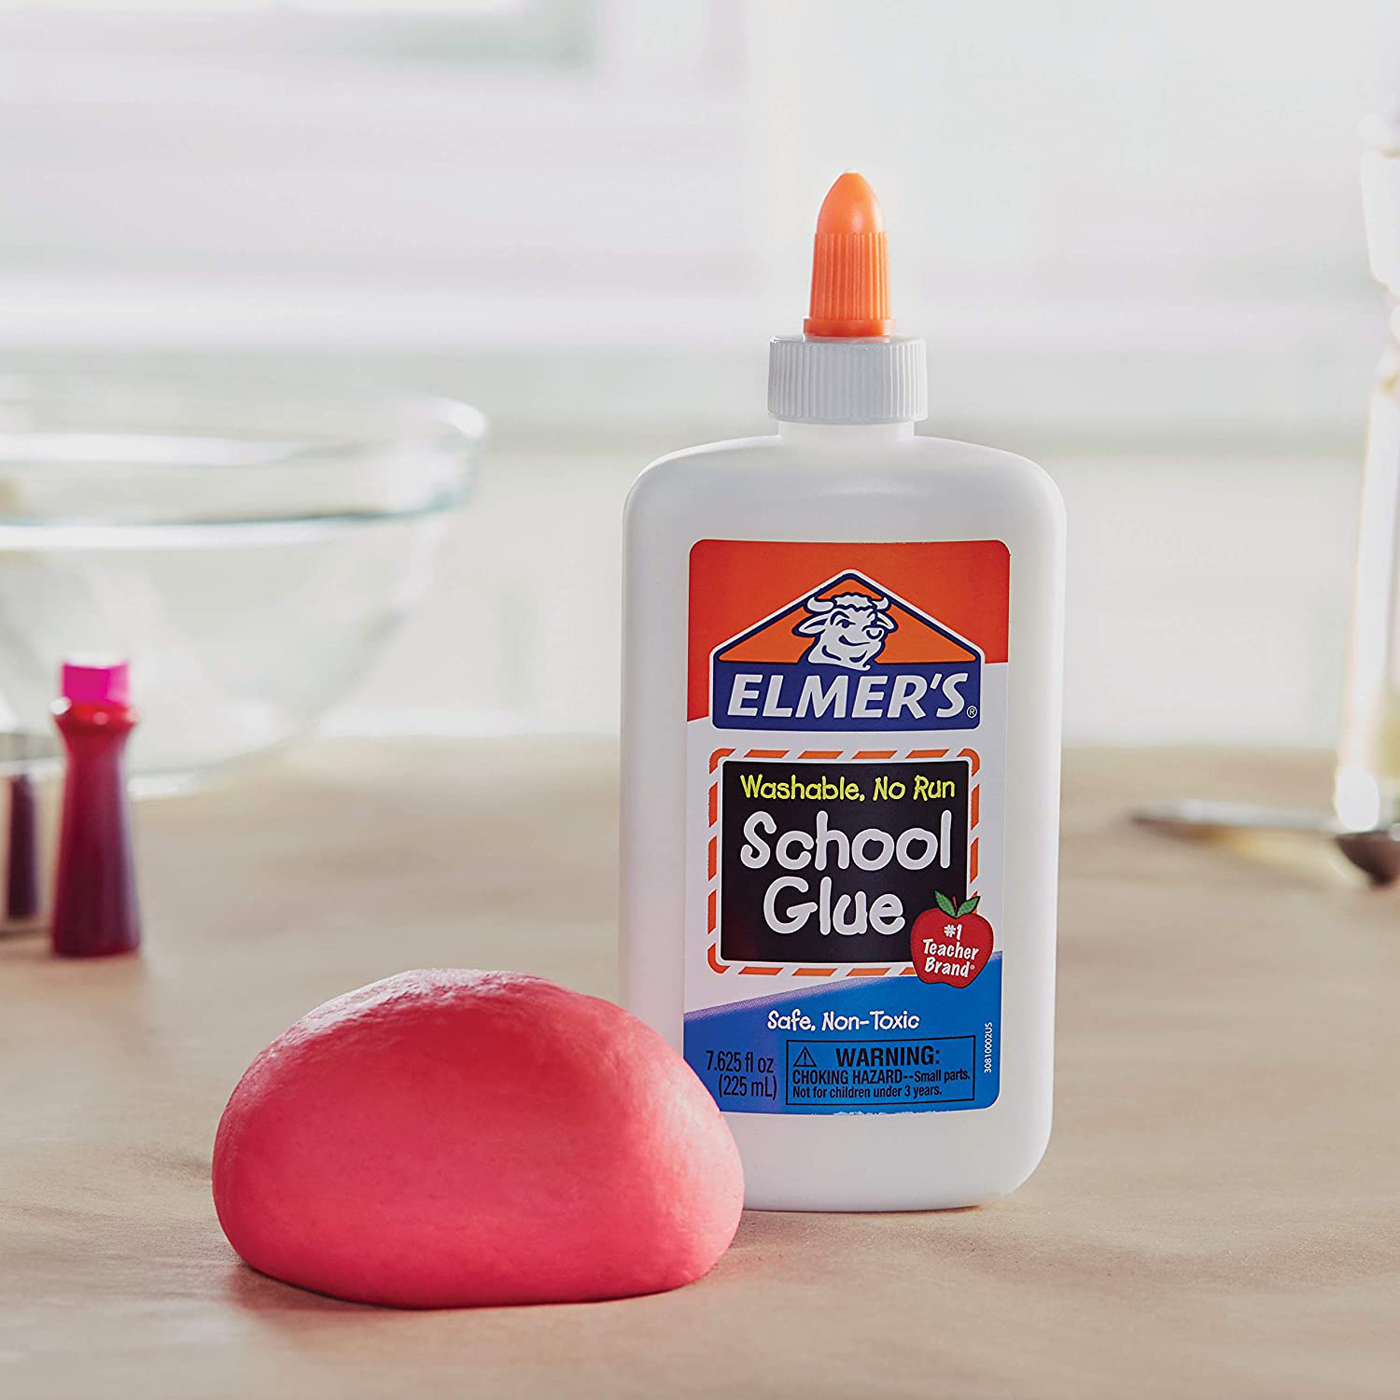 elmer's glue kit - Buy elmer's glue kit at Best Price in Malaysia